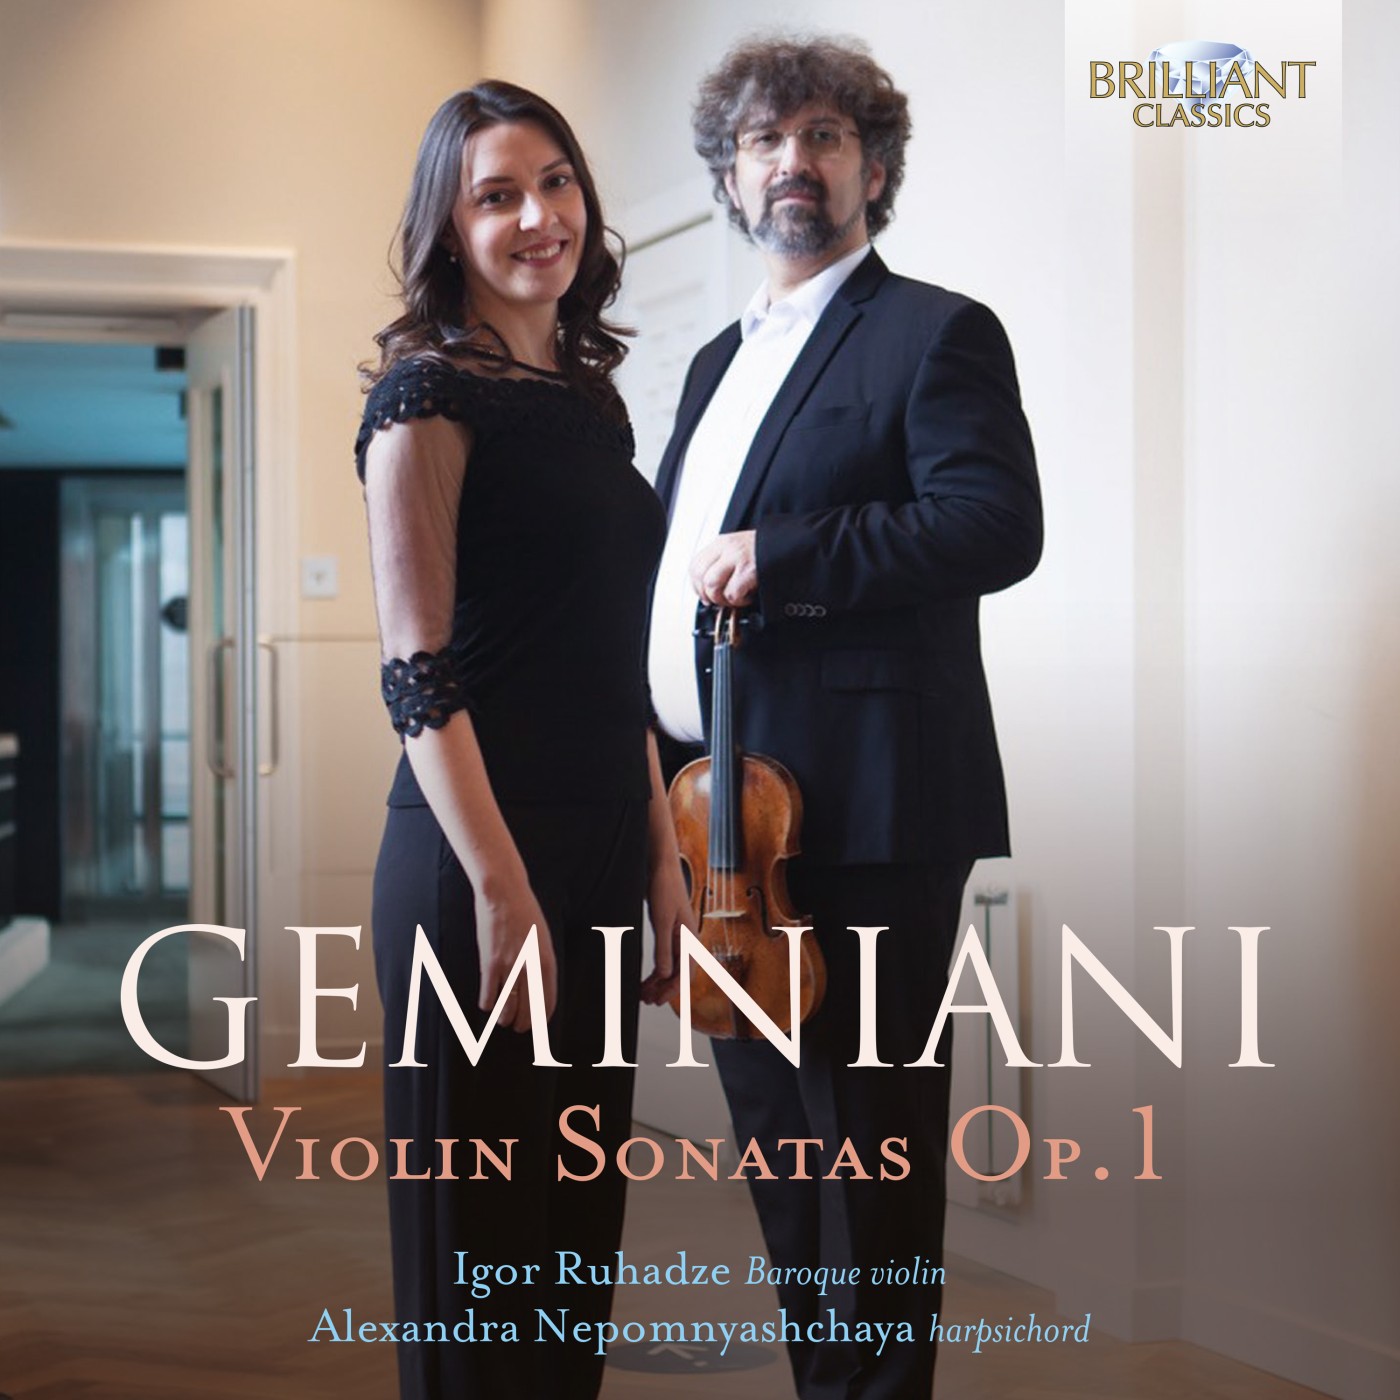 Geminiani - Violin Sonatas, Op. 1, 1739 - Igor Ruhadze & A. Nepomnyashchaya